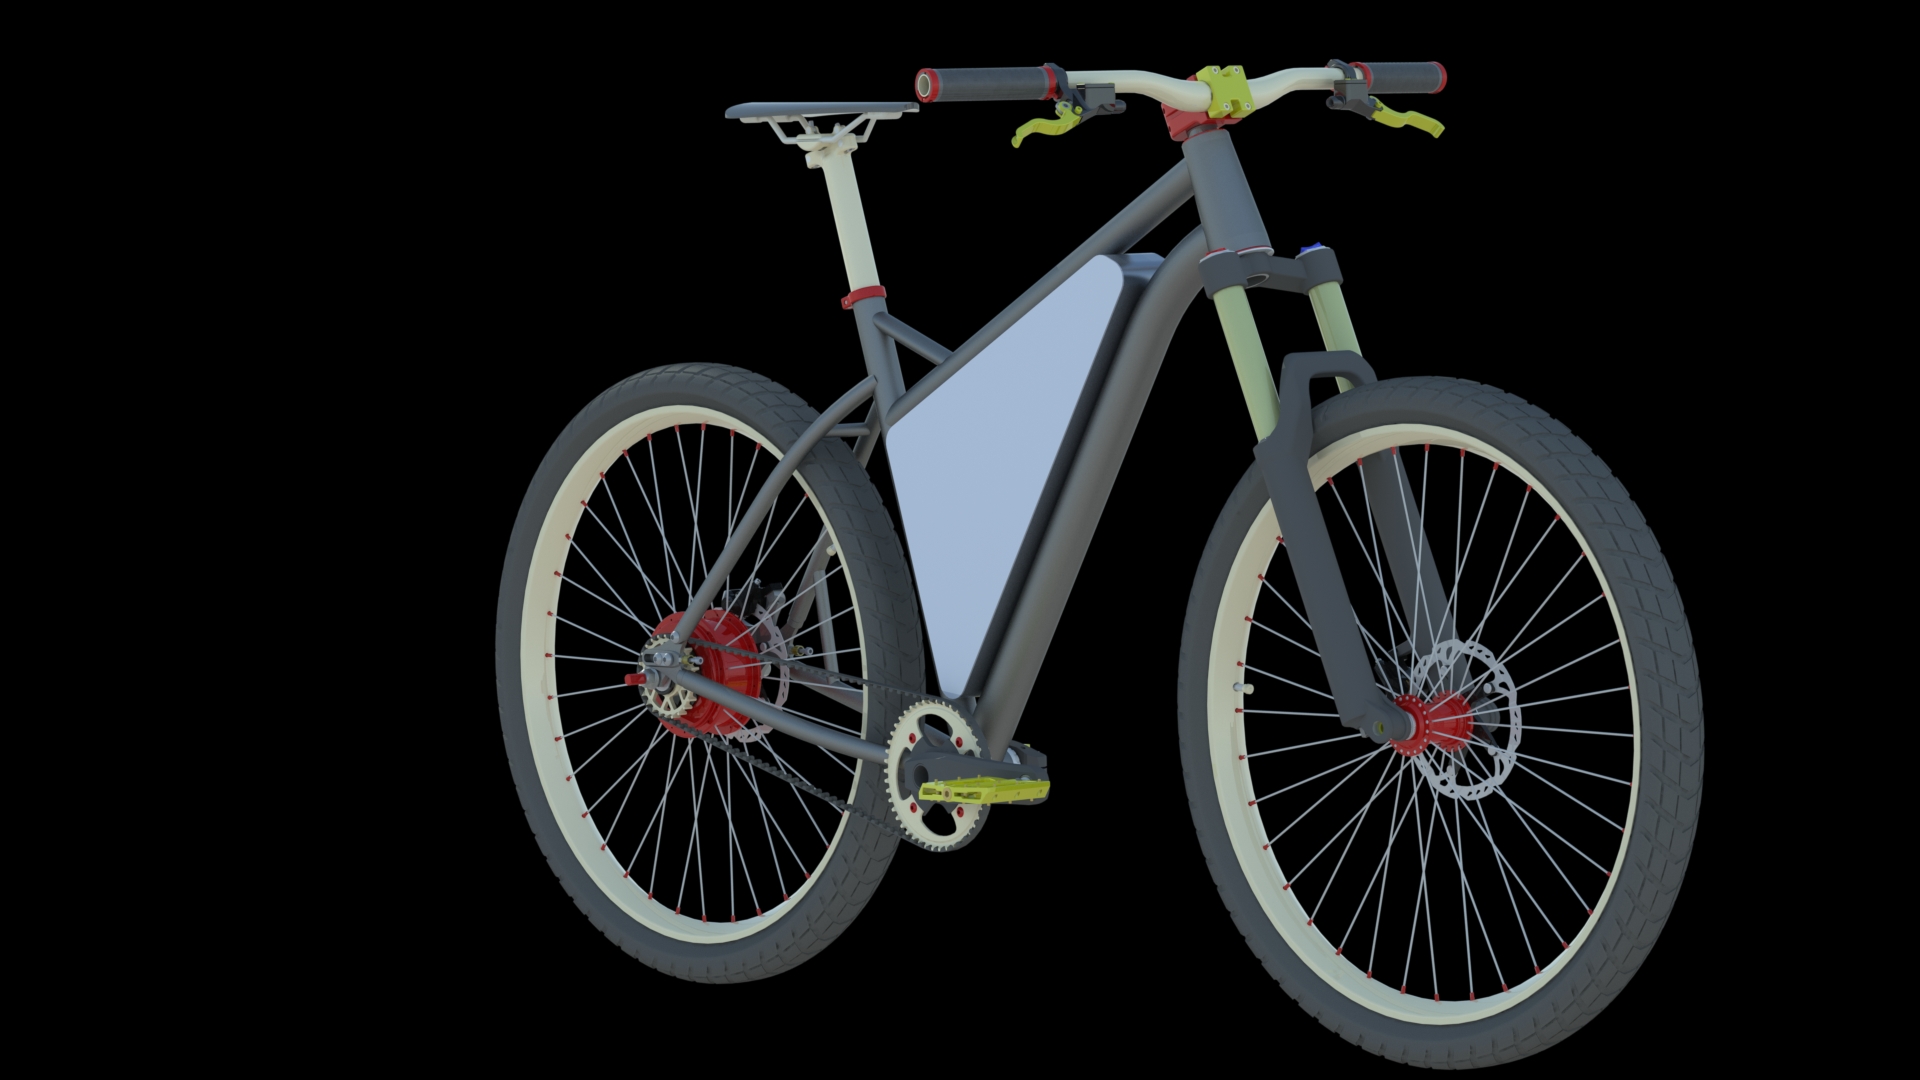 Steel B+ 硬尾电动自行车，带前三角电池组和后轮毂电机